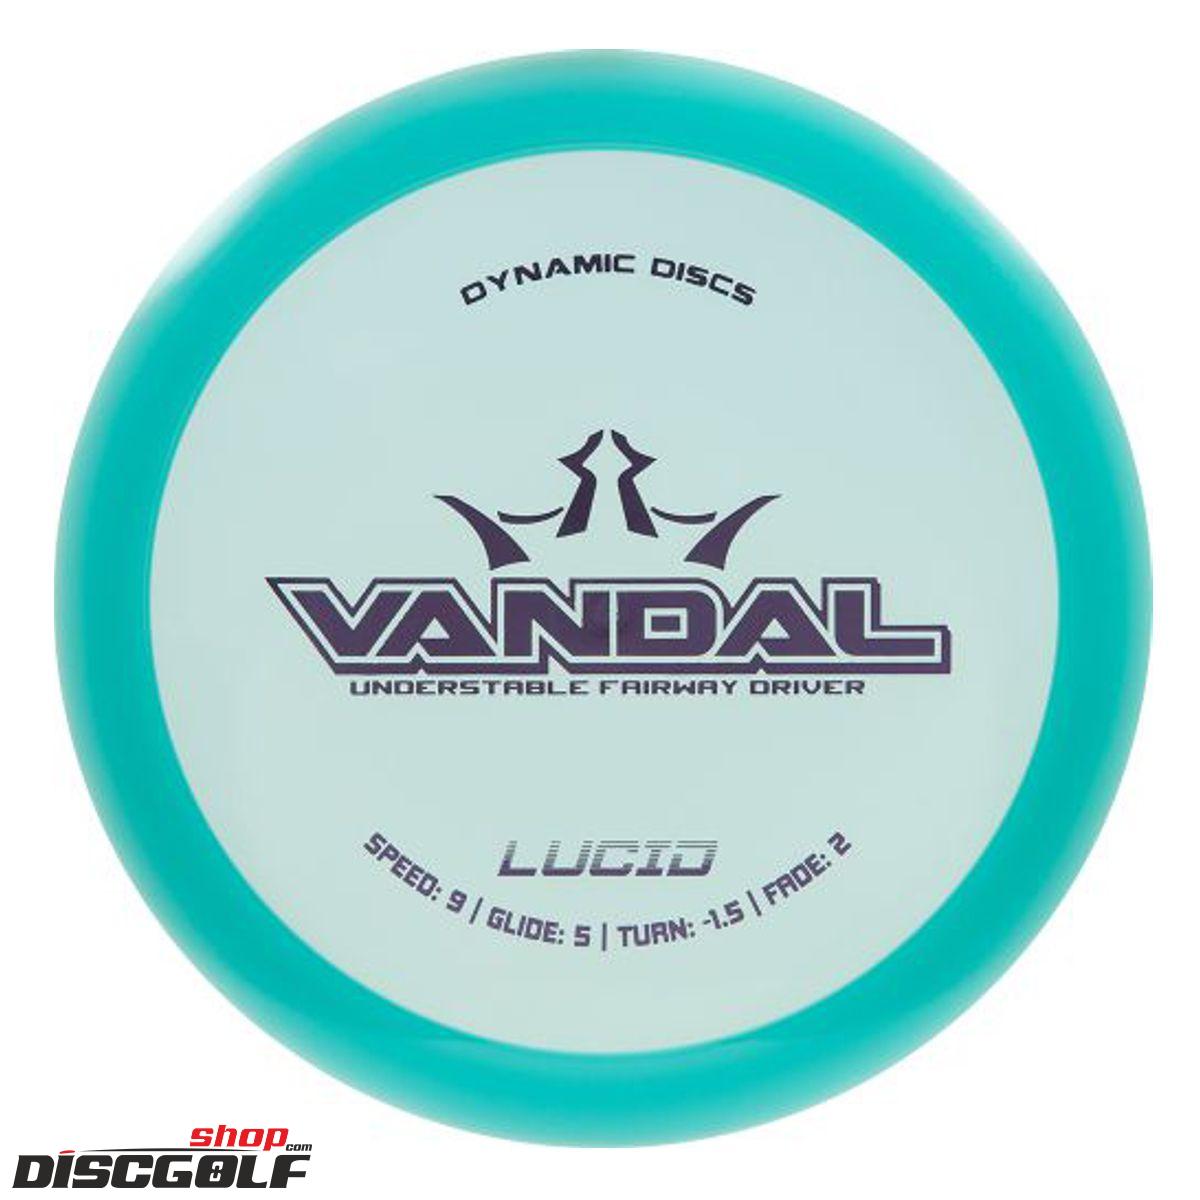 Dynamic Discs Vandal Lucid (discgolf)